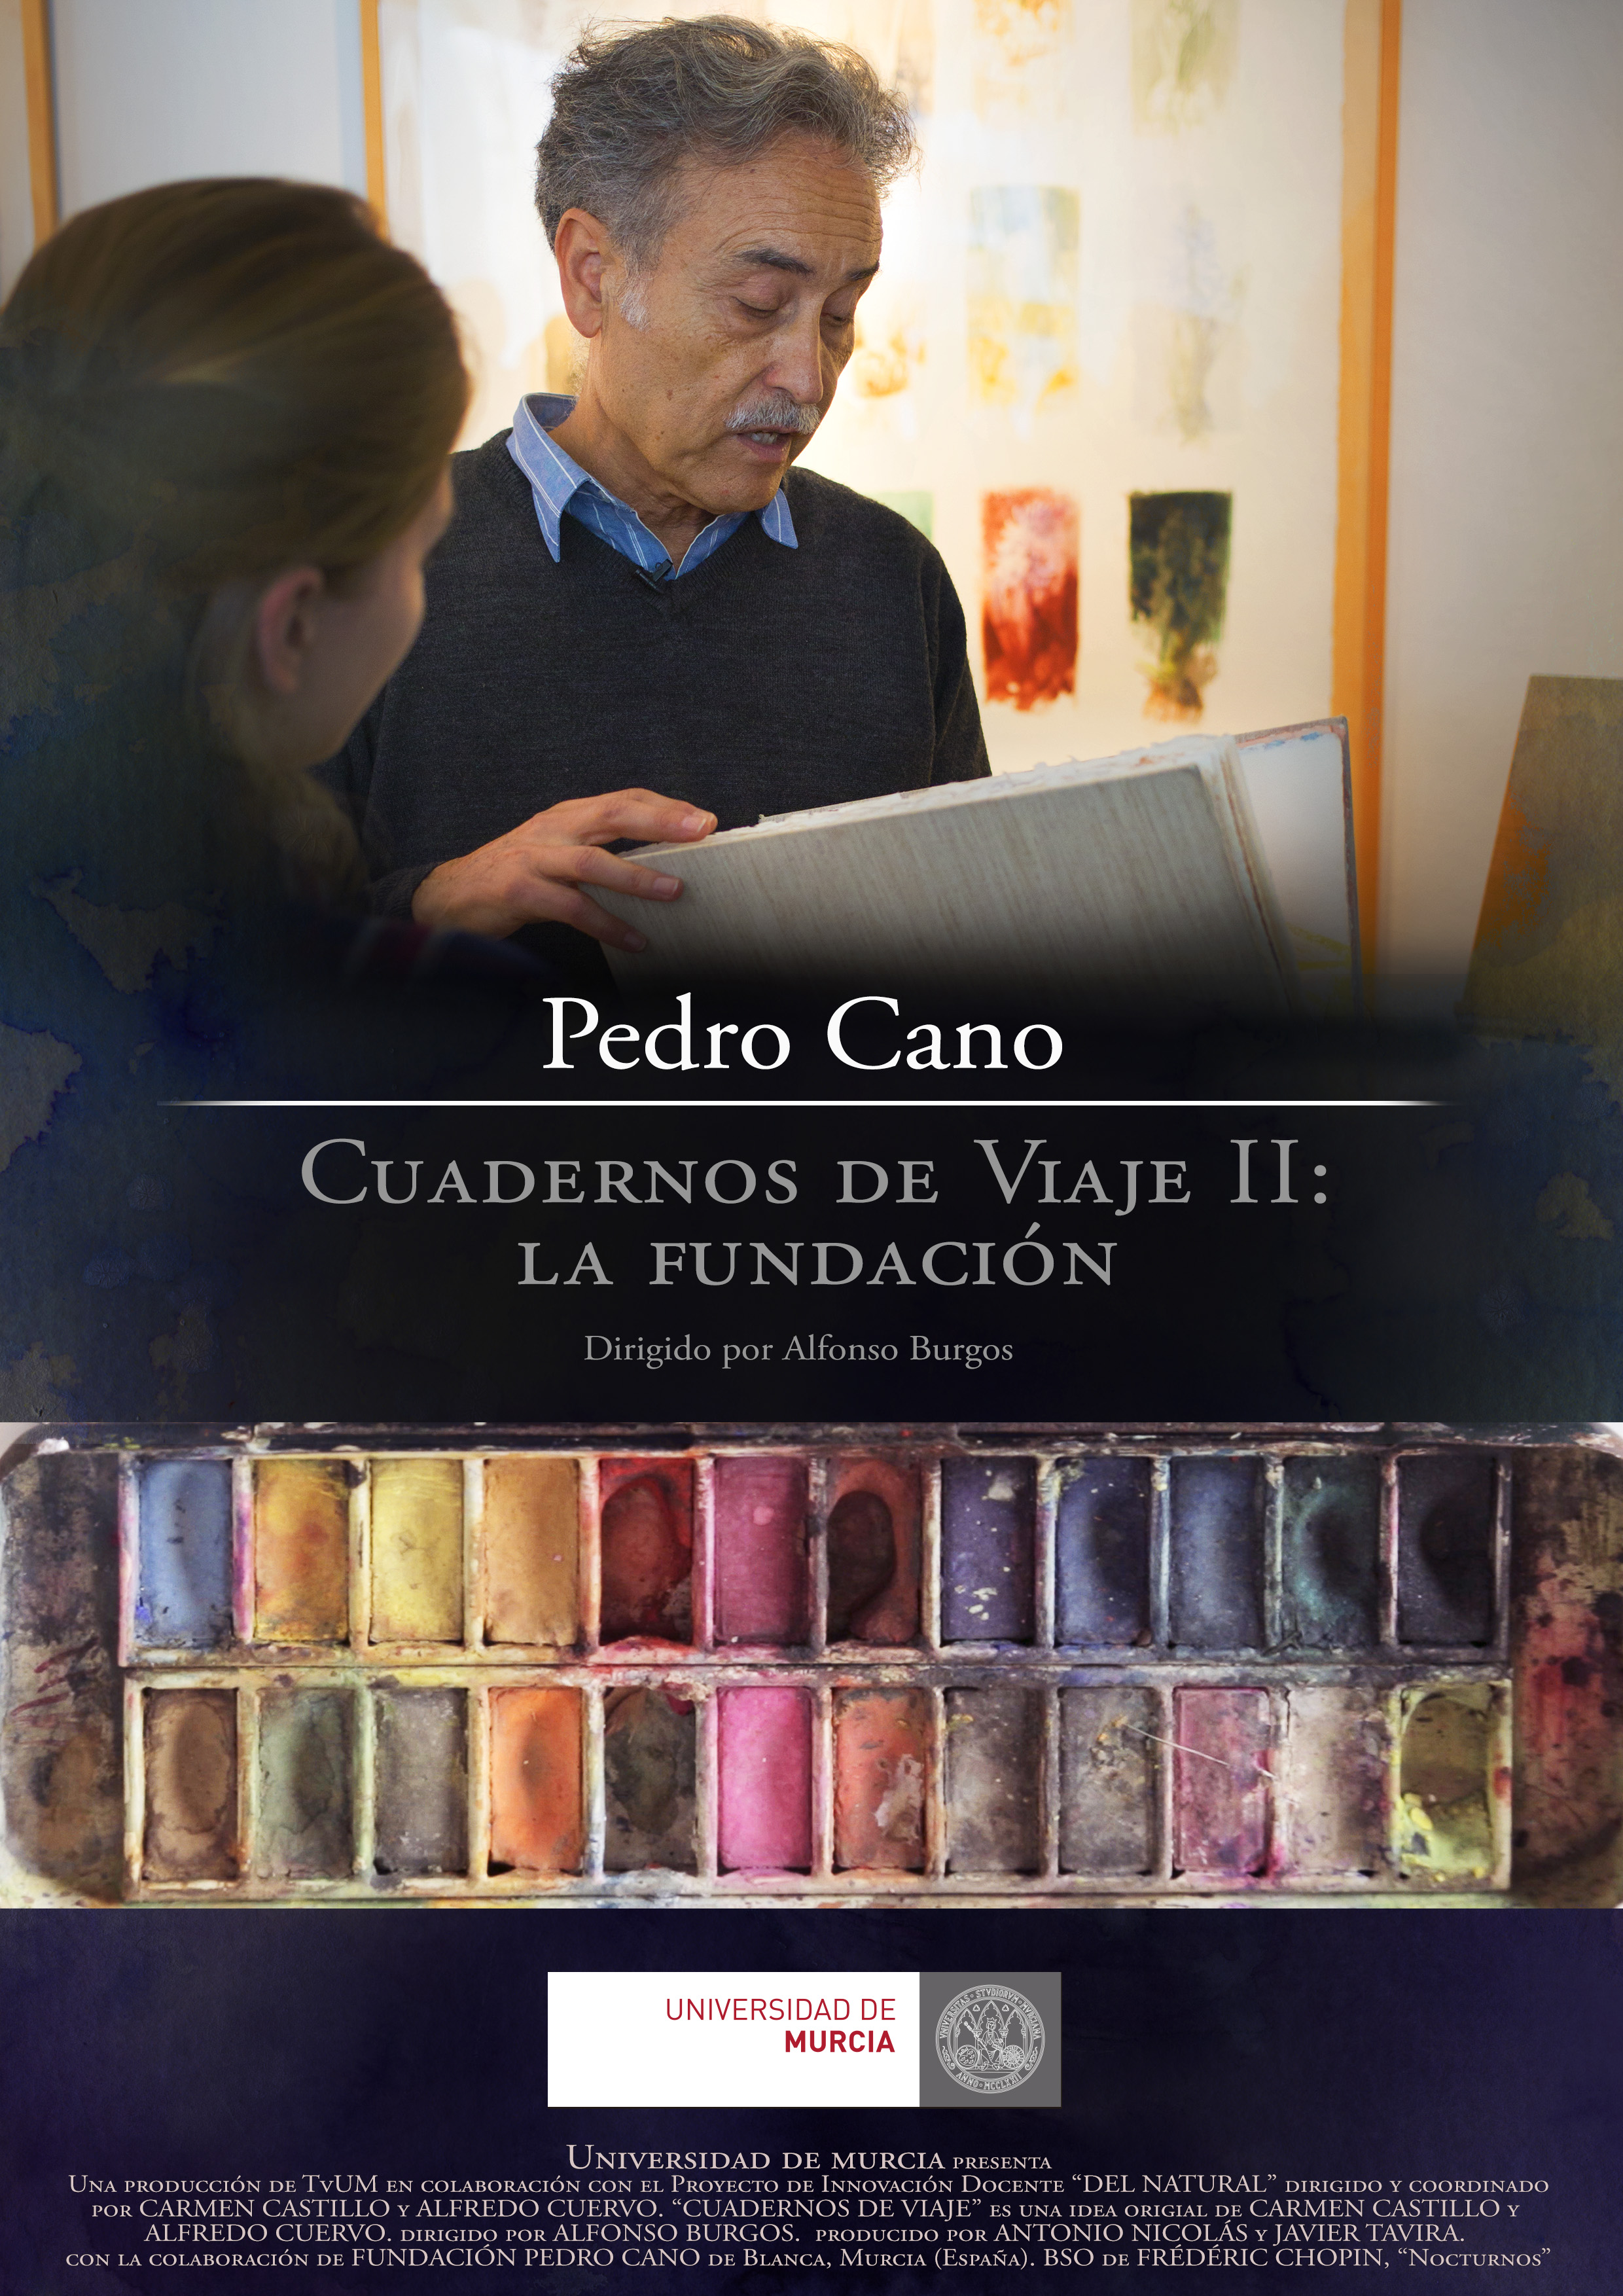 Pedro Cano: Travel Notebooks II - The Fundation